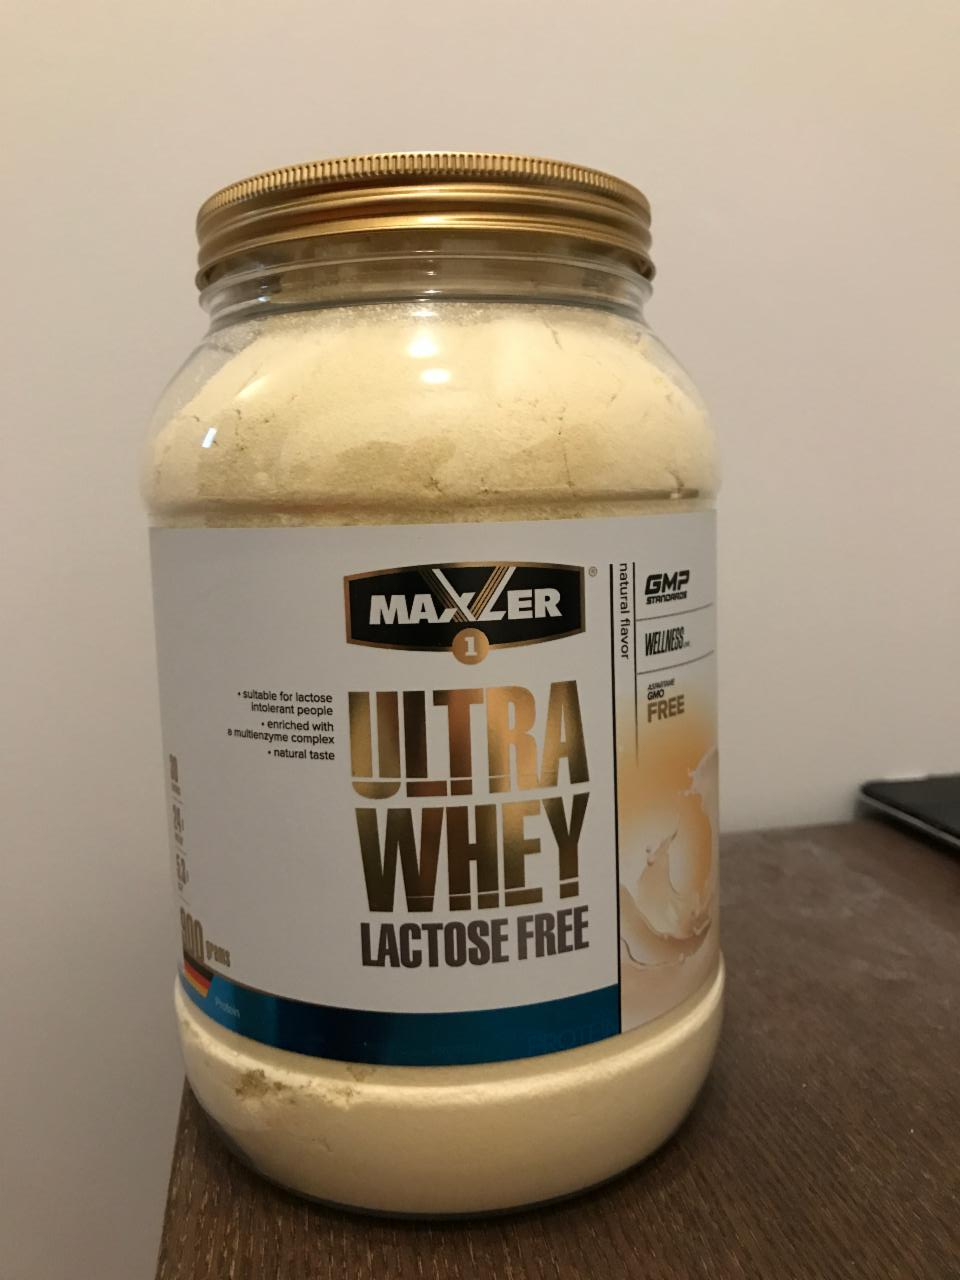 Фото - Протеин без лактозы ULTRA WHEY LACTOSE FREE natural flavor MAXLER